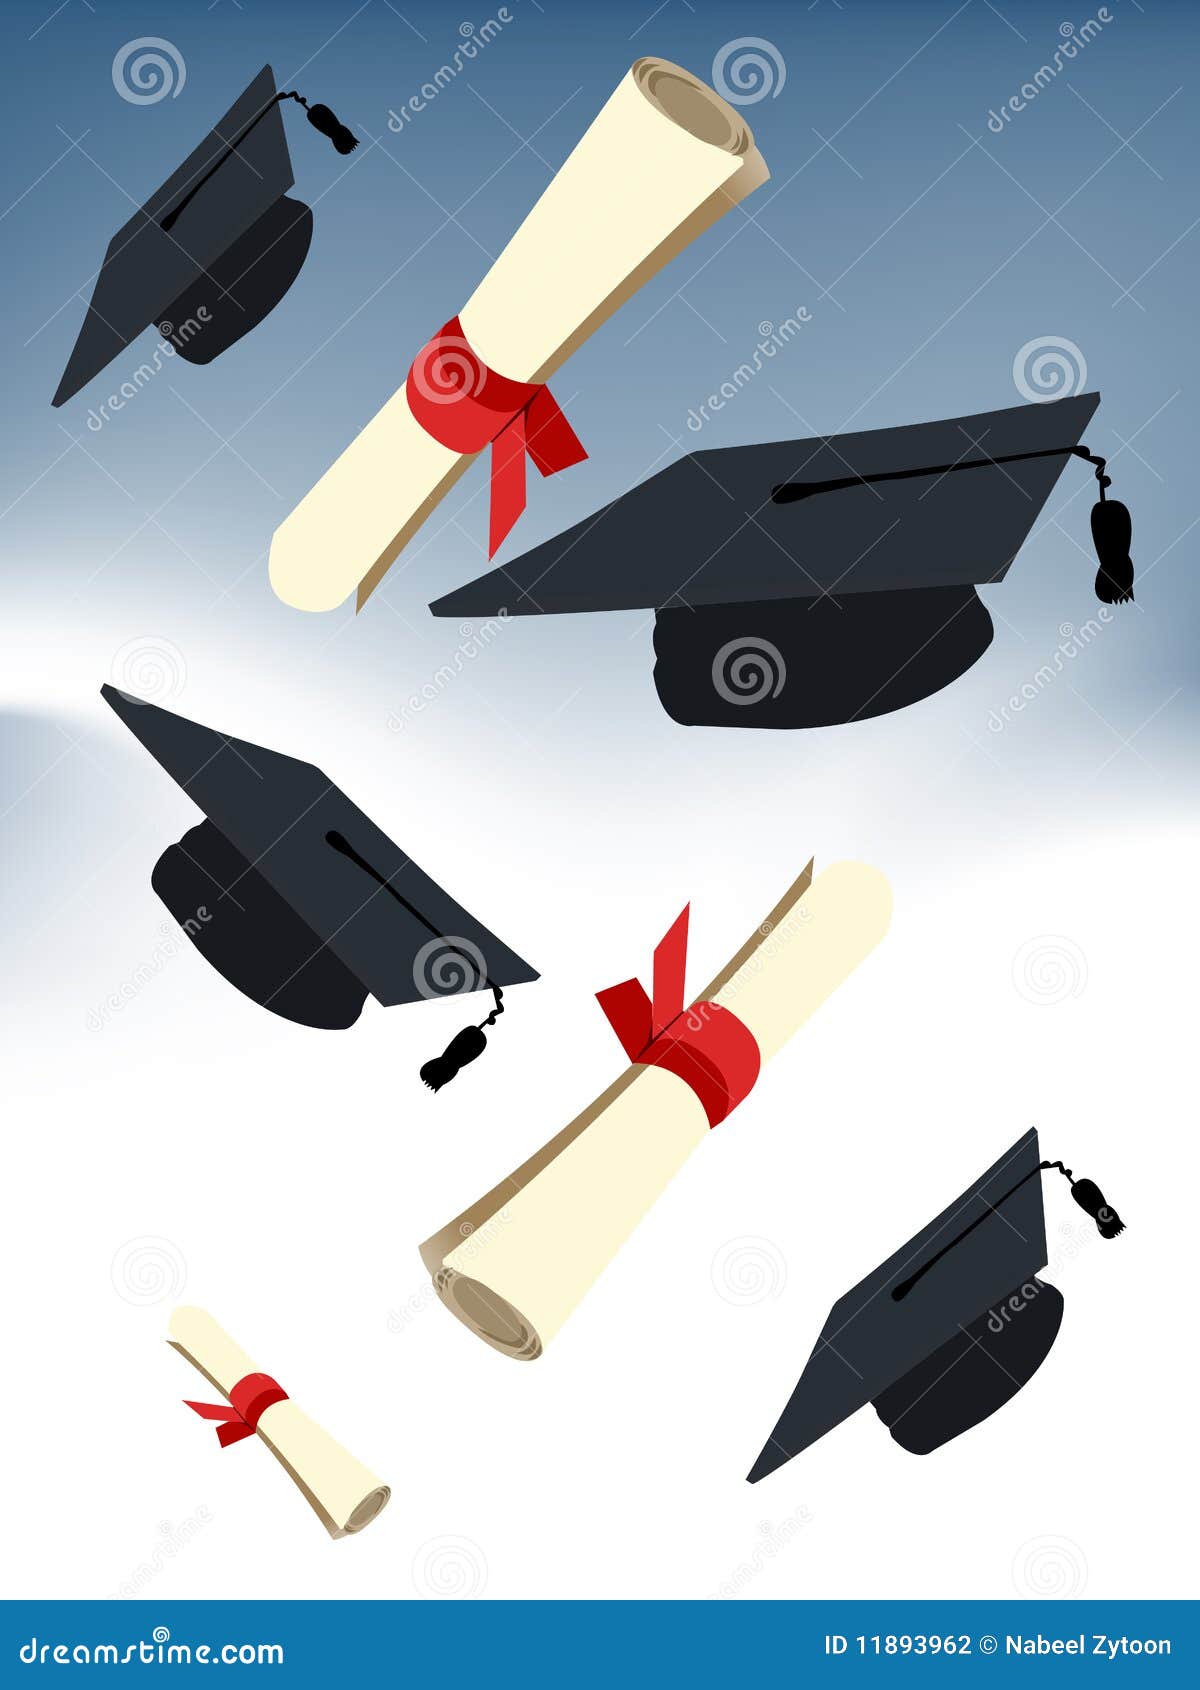 Graduation cap stock vector. Illustration of drawing - 11893962